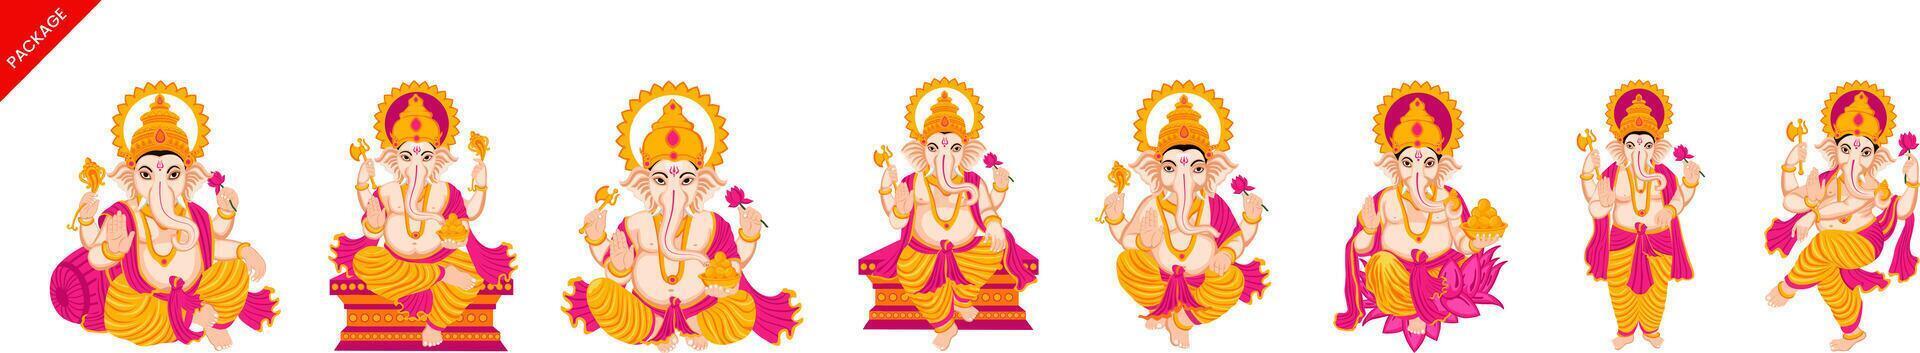 Happy Ganesh Chaturthi, Ganesh illustration Package vector